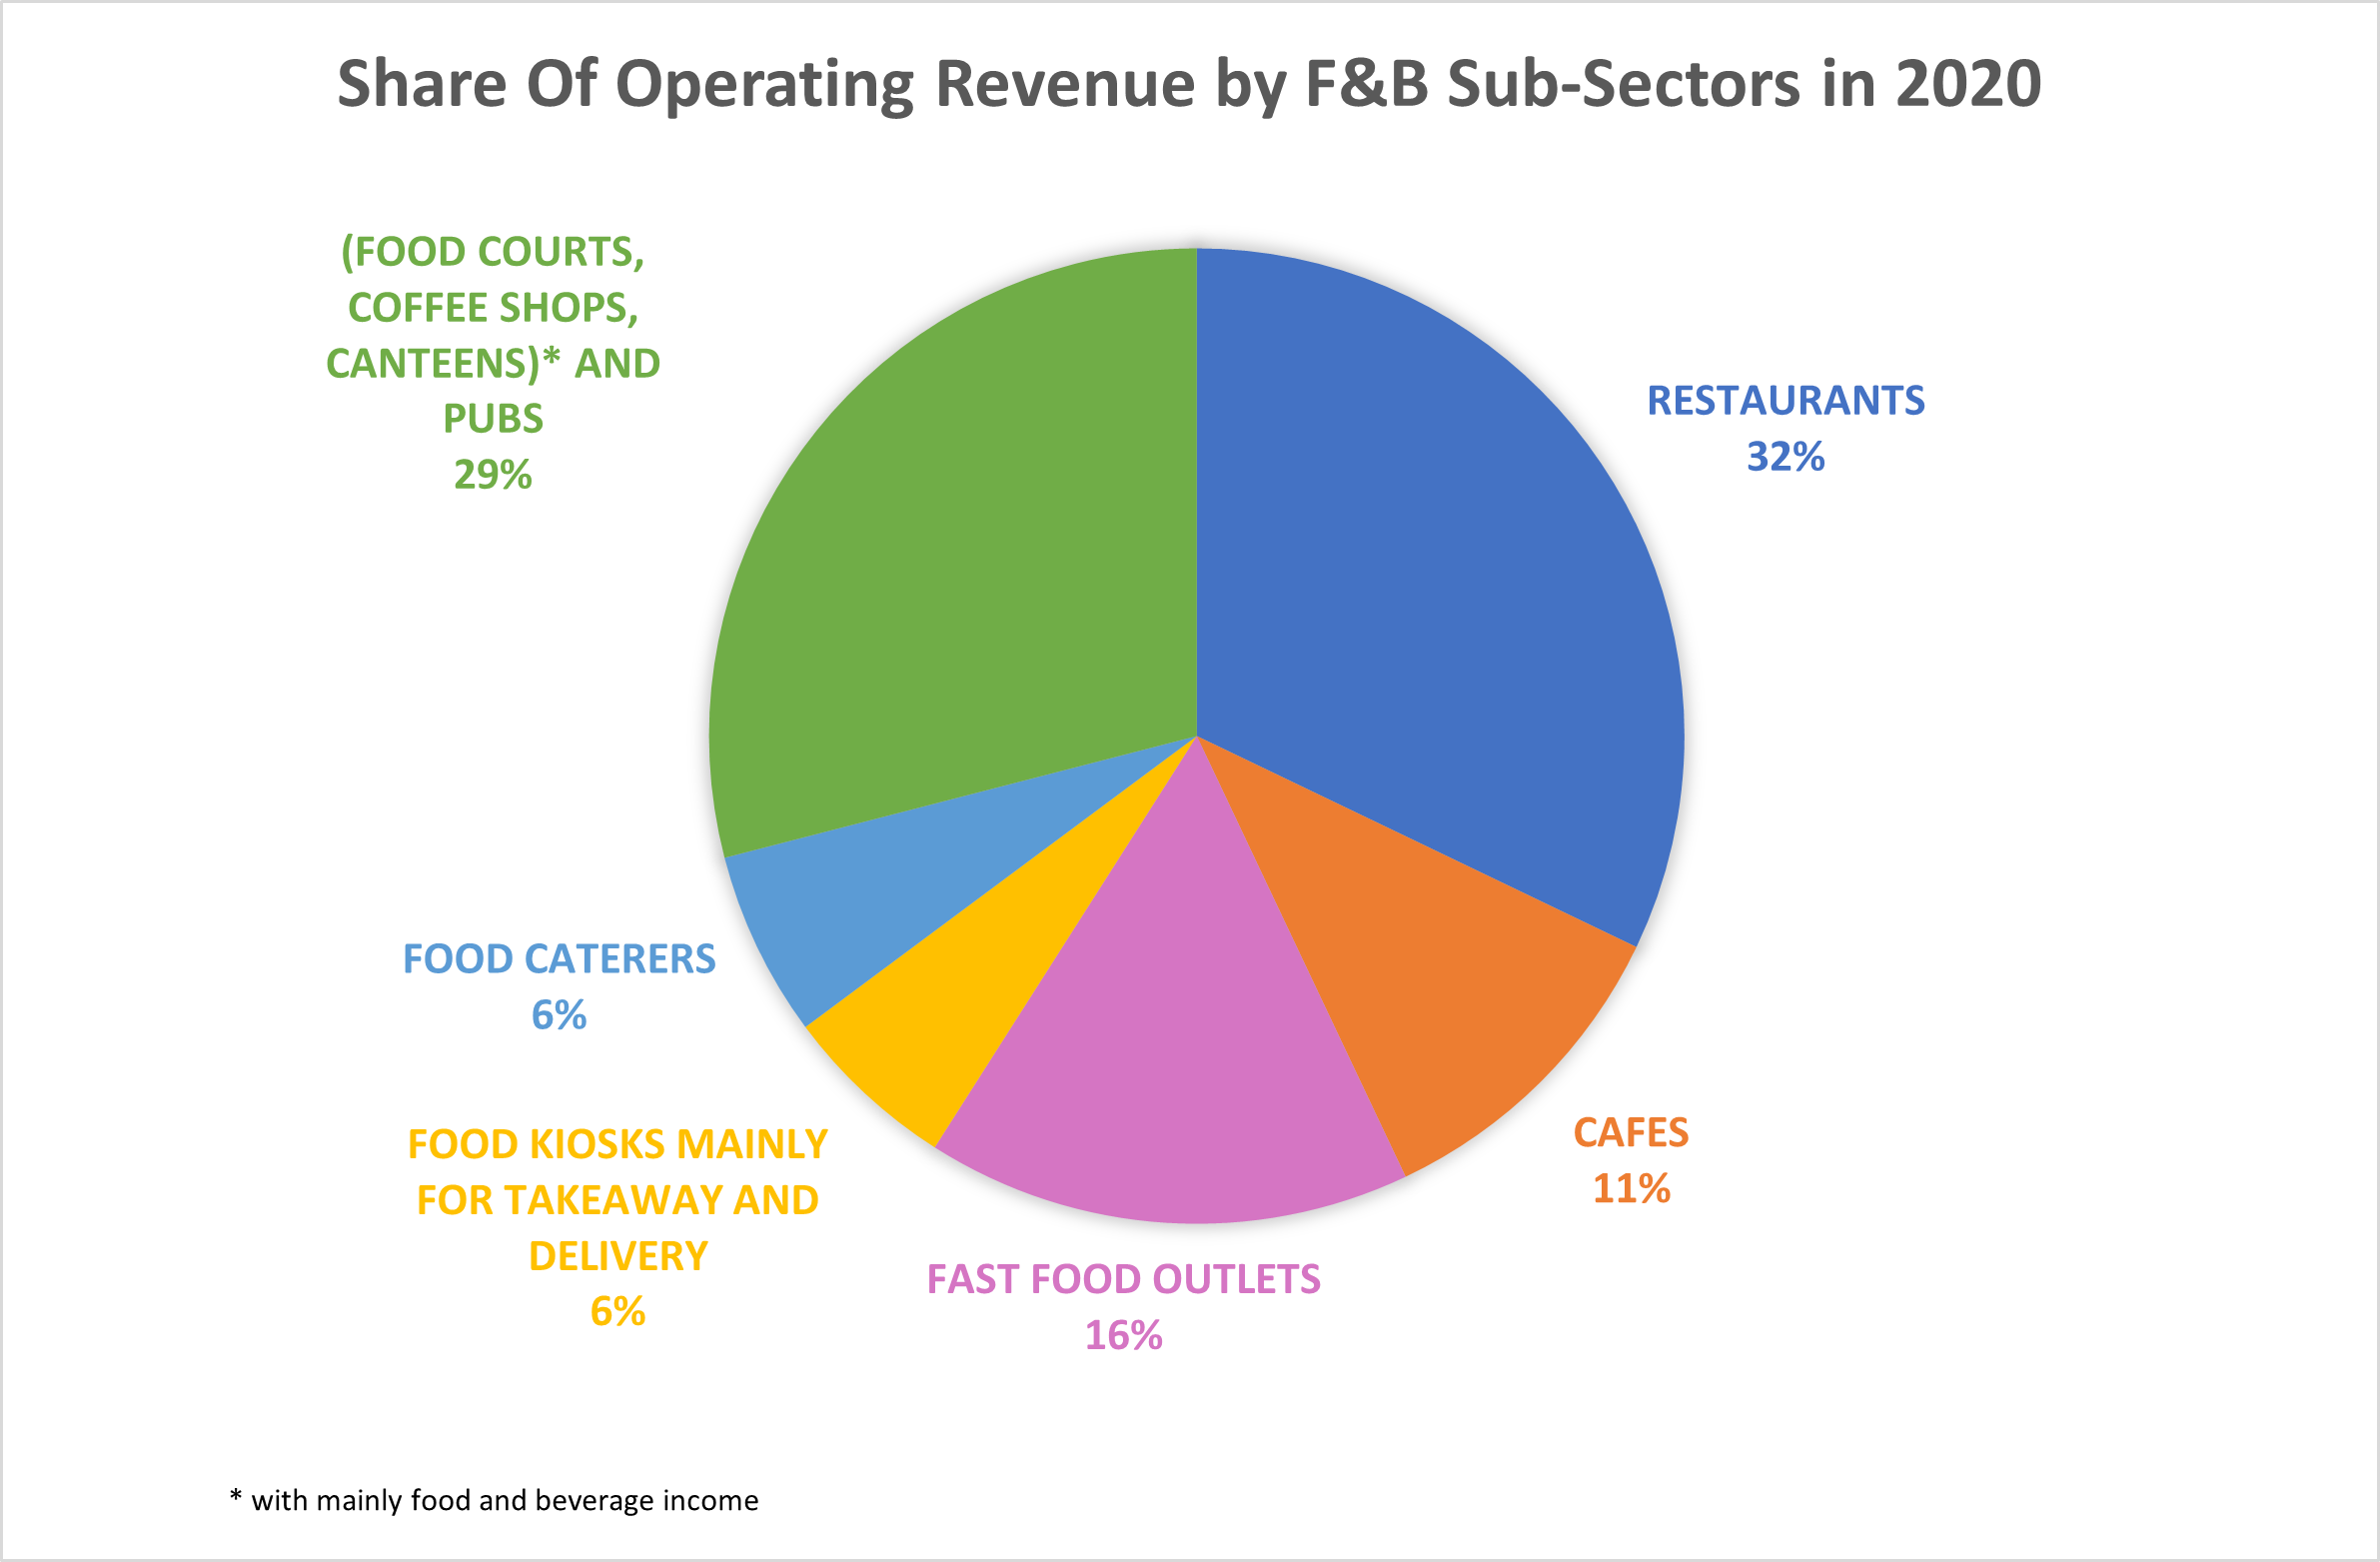 F&B sub-sectors operating revenue in 2020